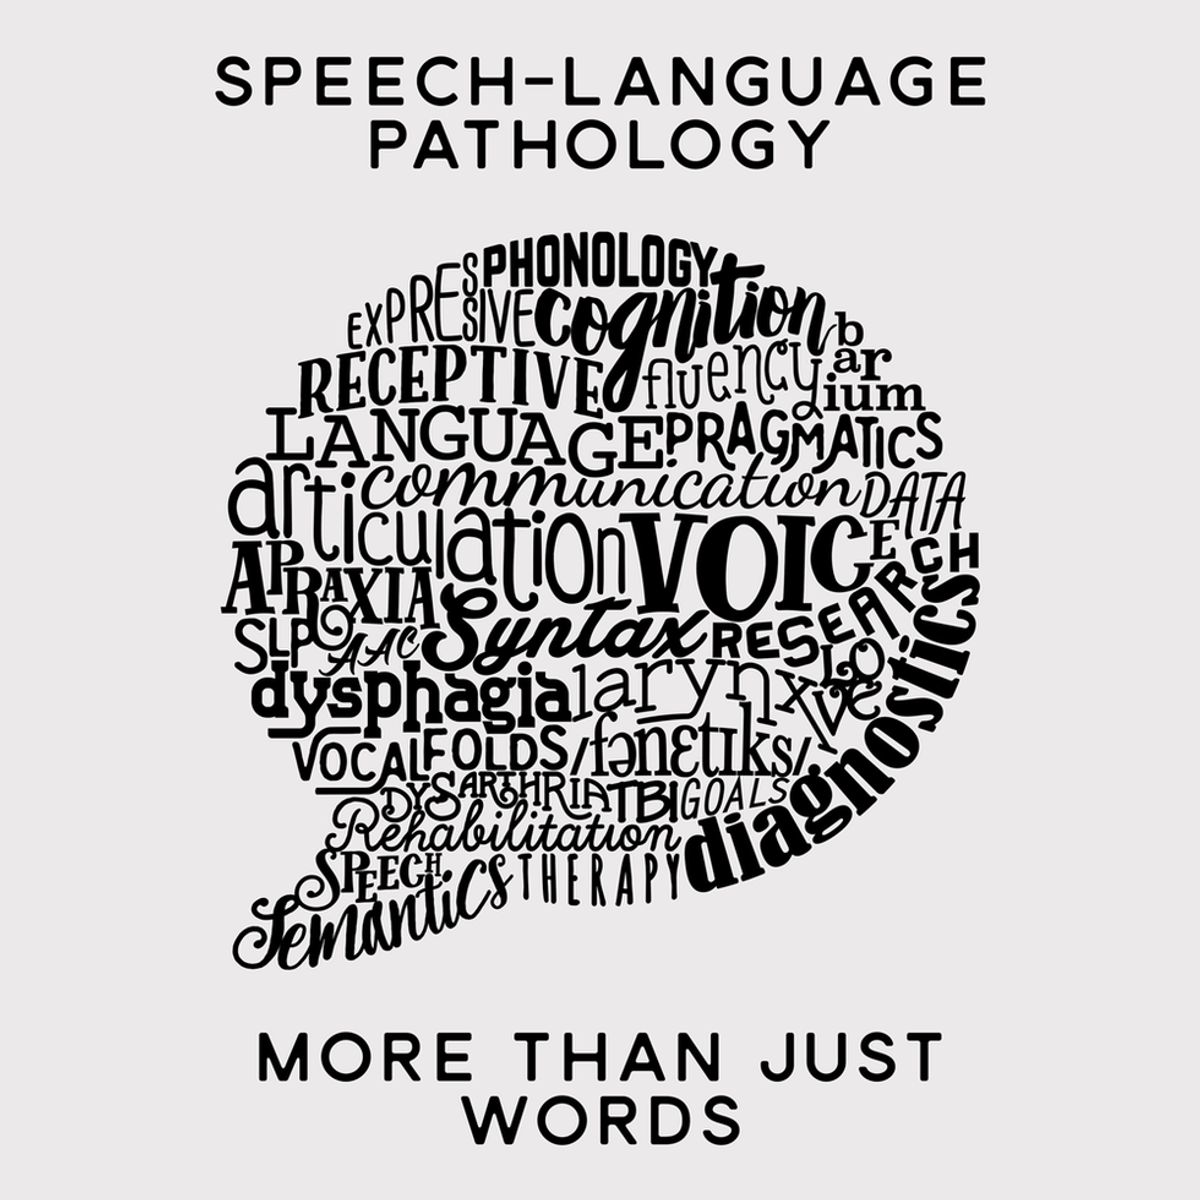 14 Things Speech-Language Pathology Majors Say